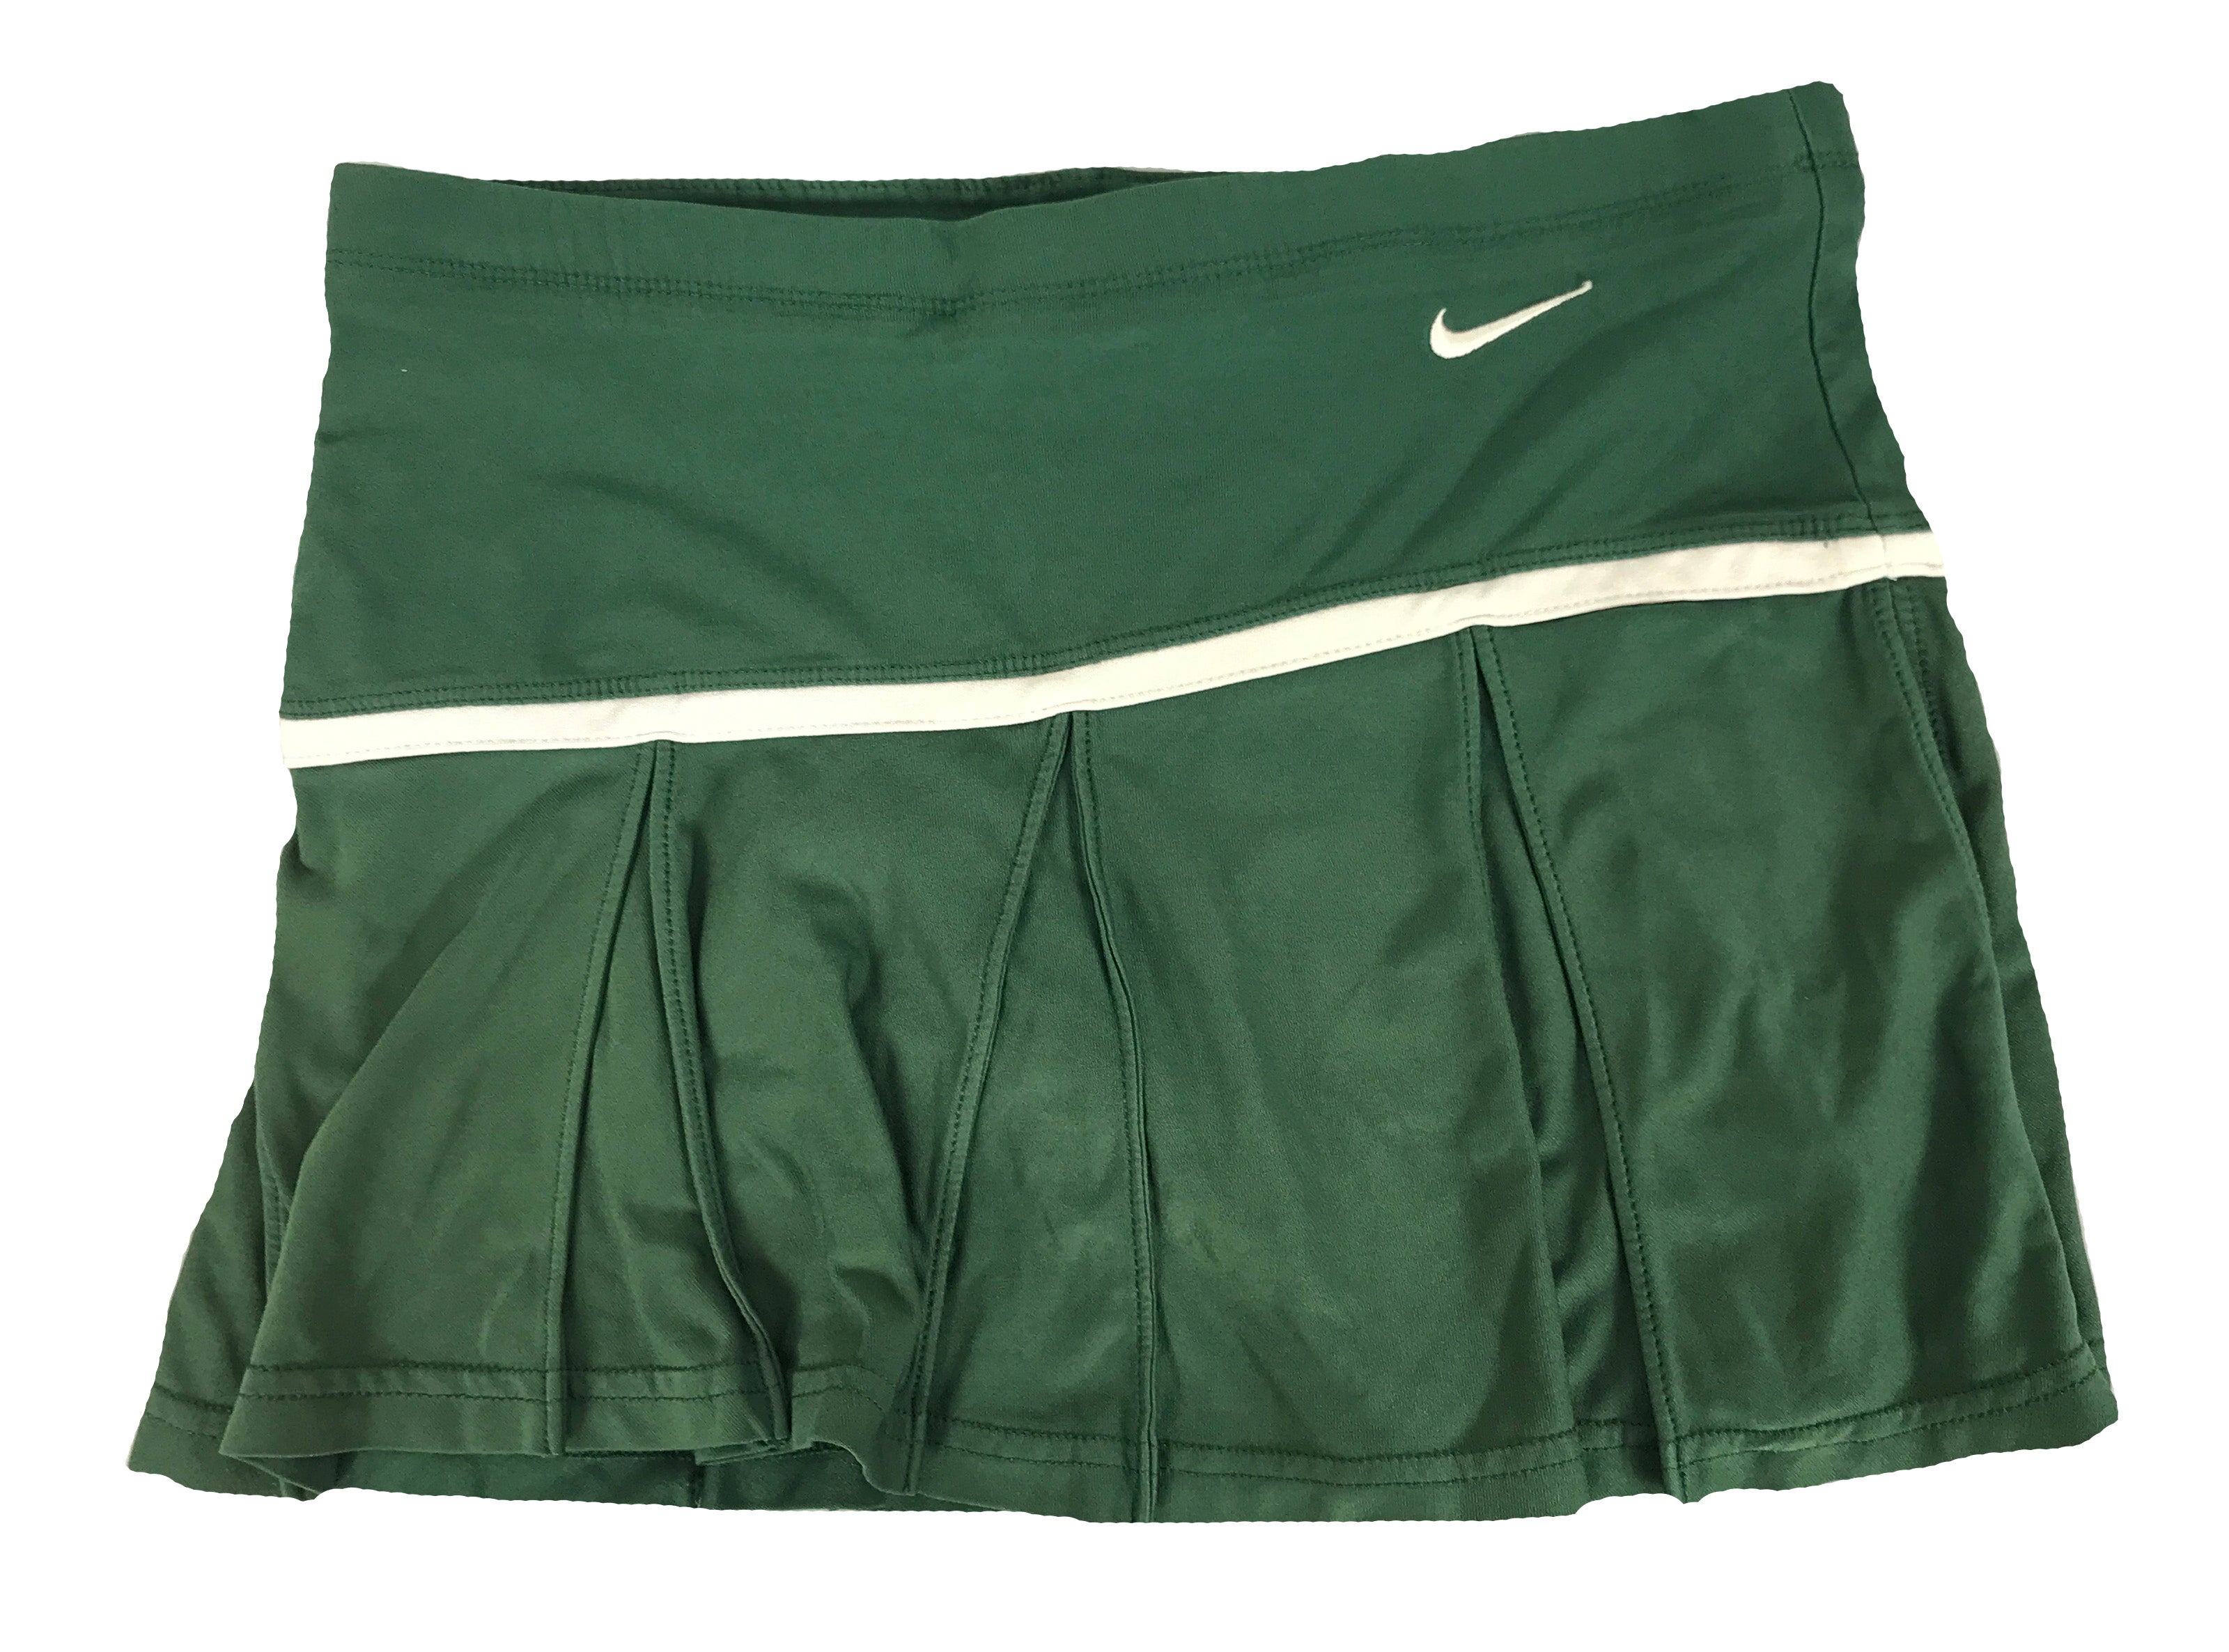 Nike Green Fit Dry Tennis Skort Women's Size XS